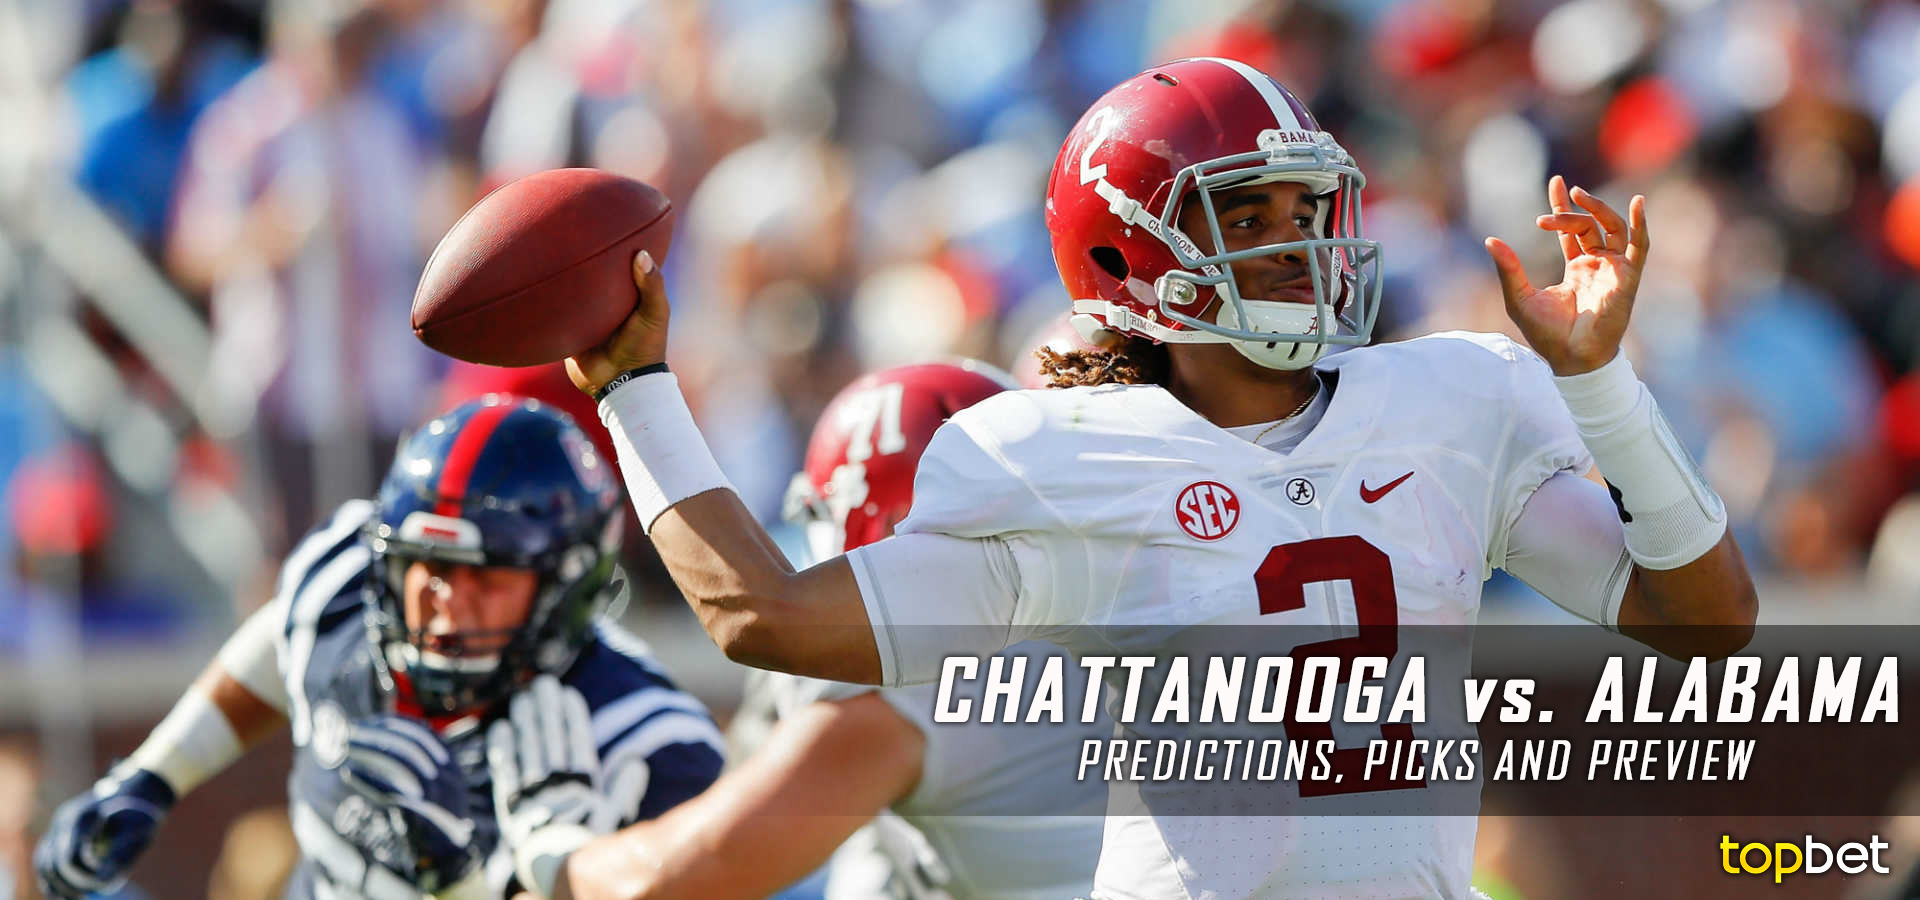 Chattanooga vs Alabama Football Predictions, Picks & Preview